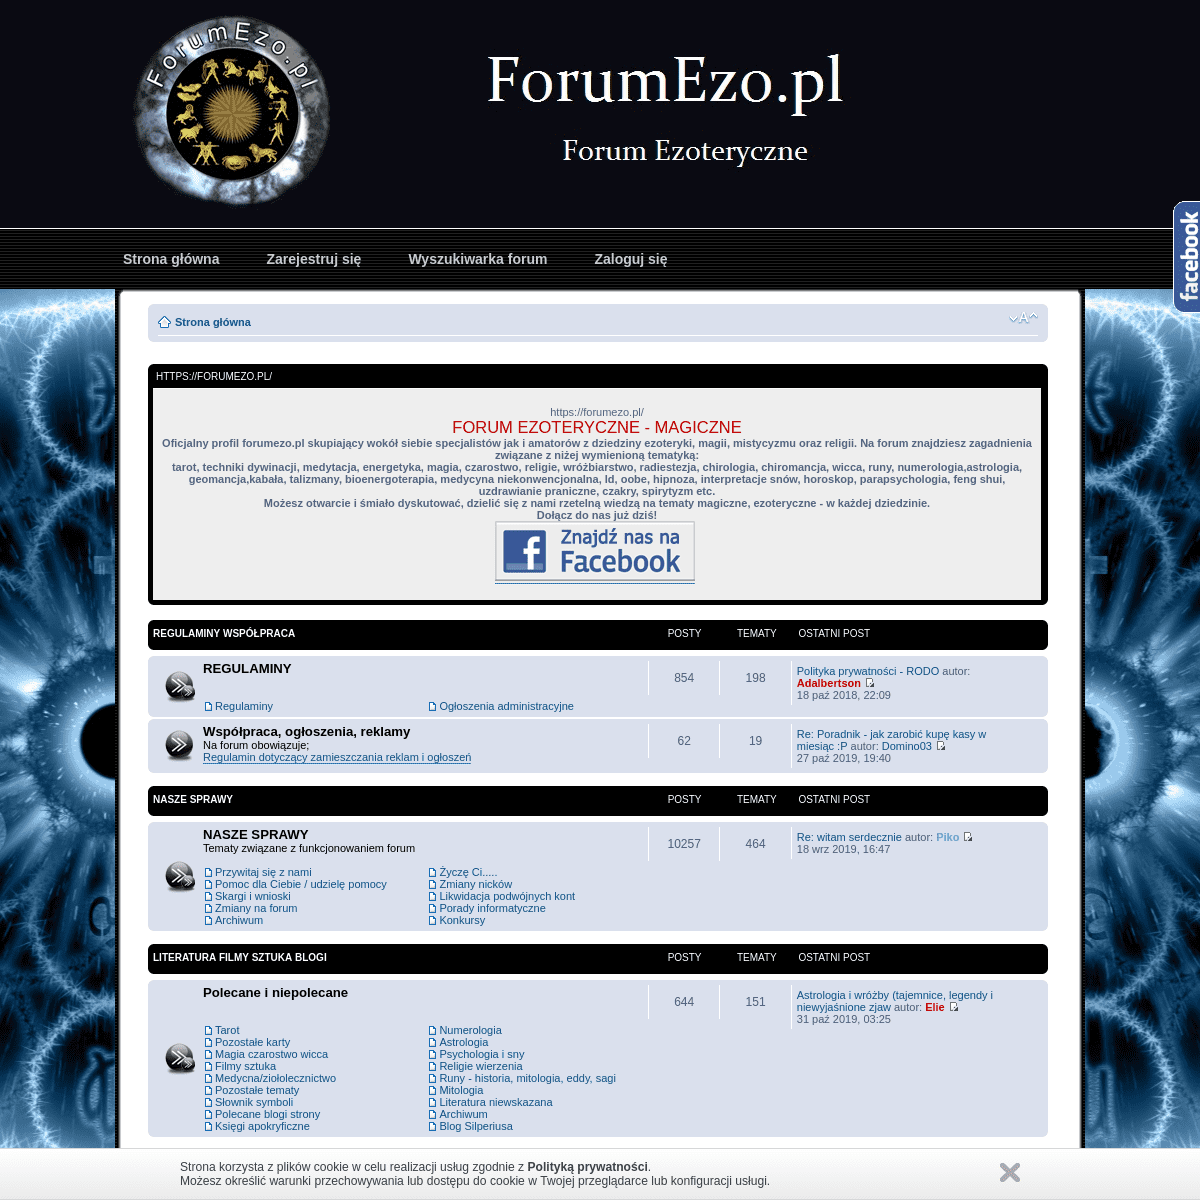 A complete backup of forumezo.pl